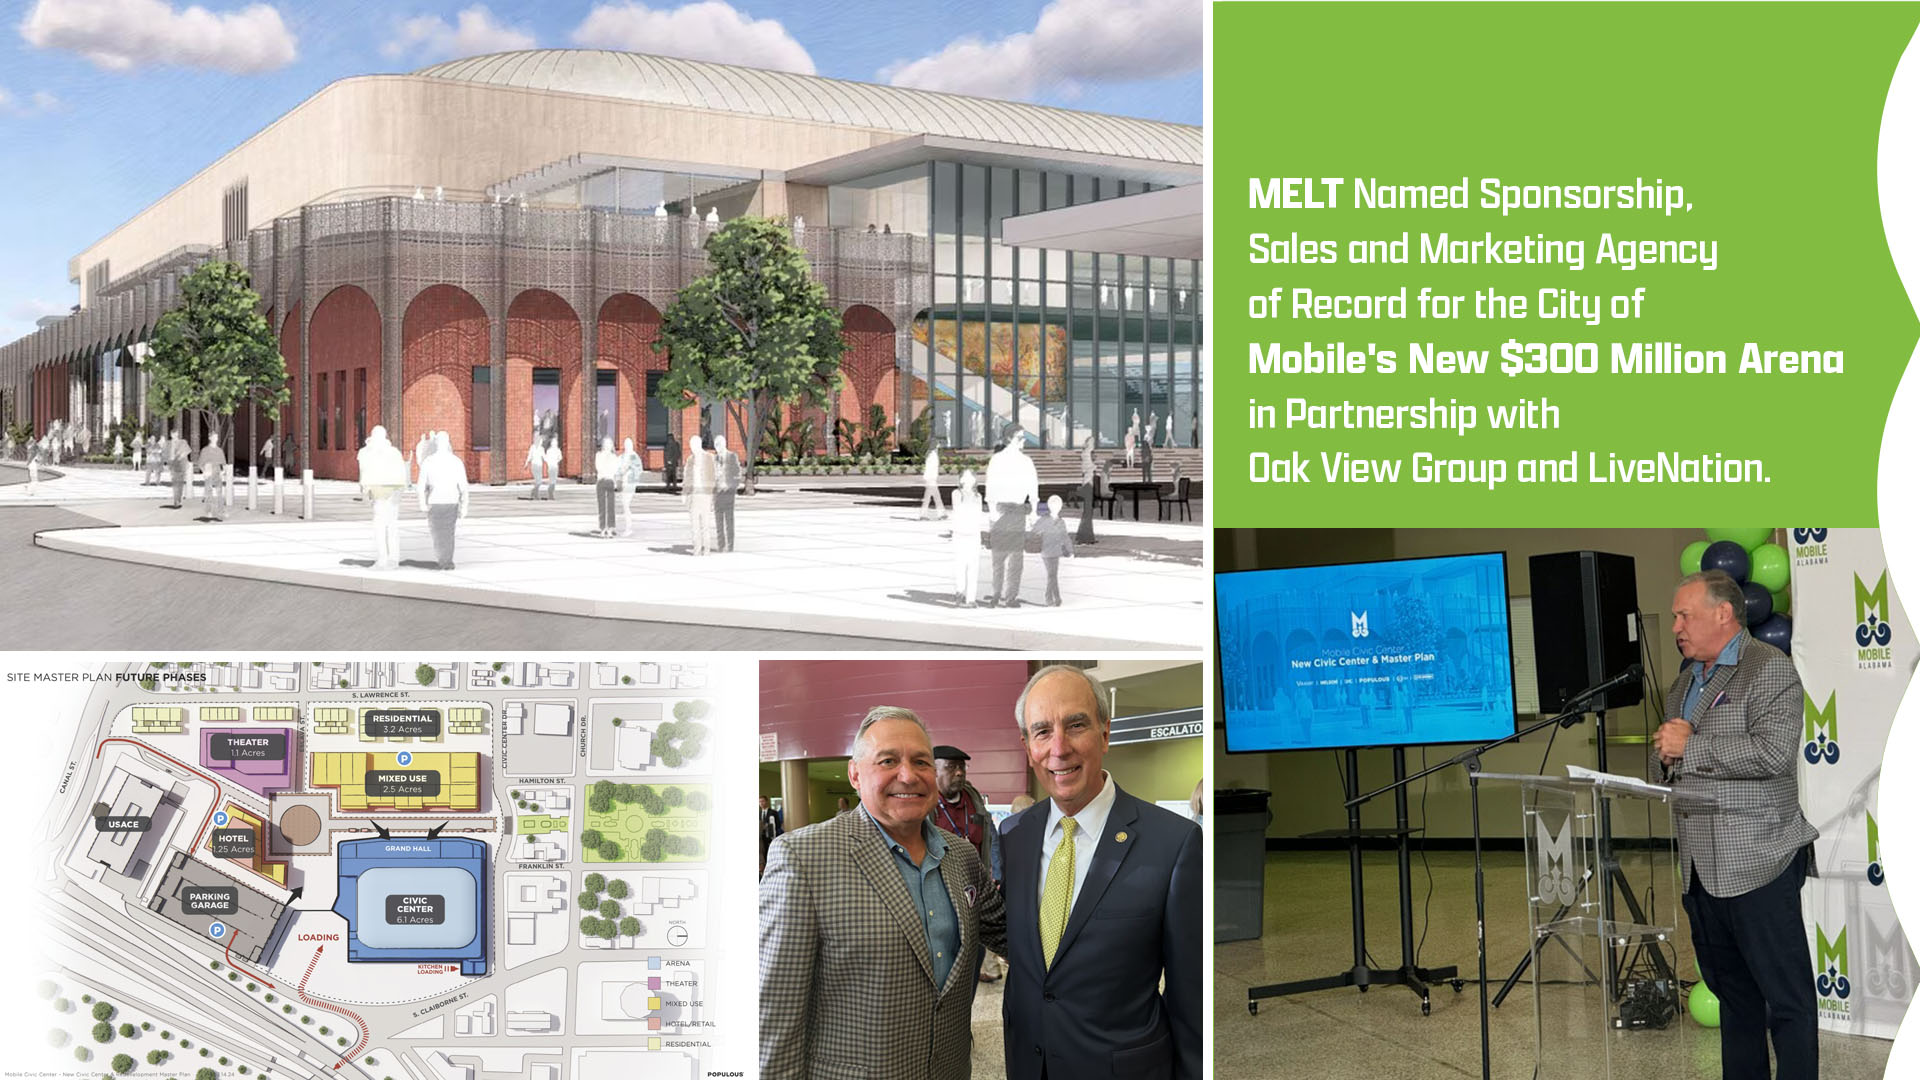 MELT and Mobile, AL partnership